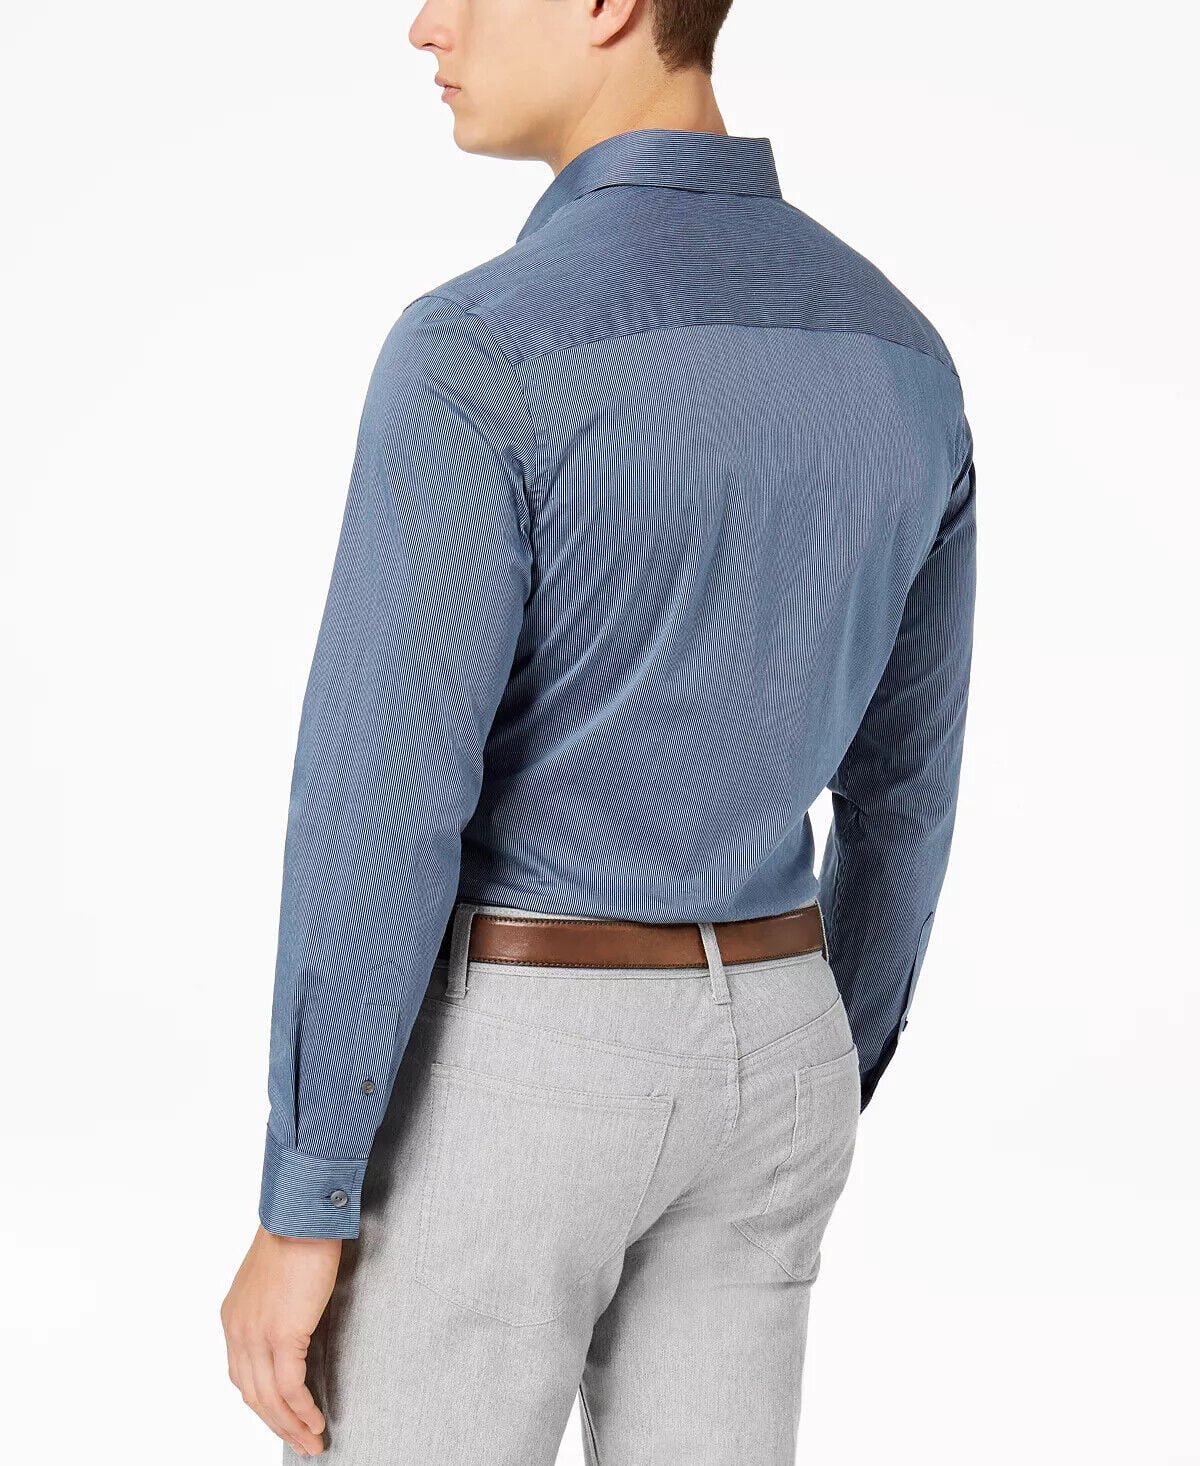 ALFANI Men’s Stretch Modern Stripe Dress Shirt, Neo Navy Blue XL